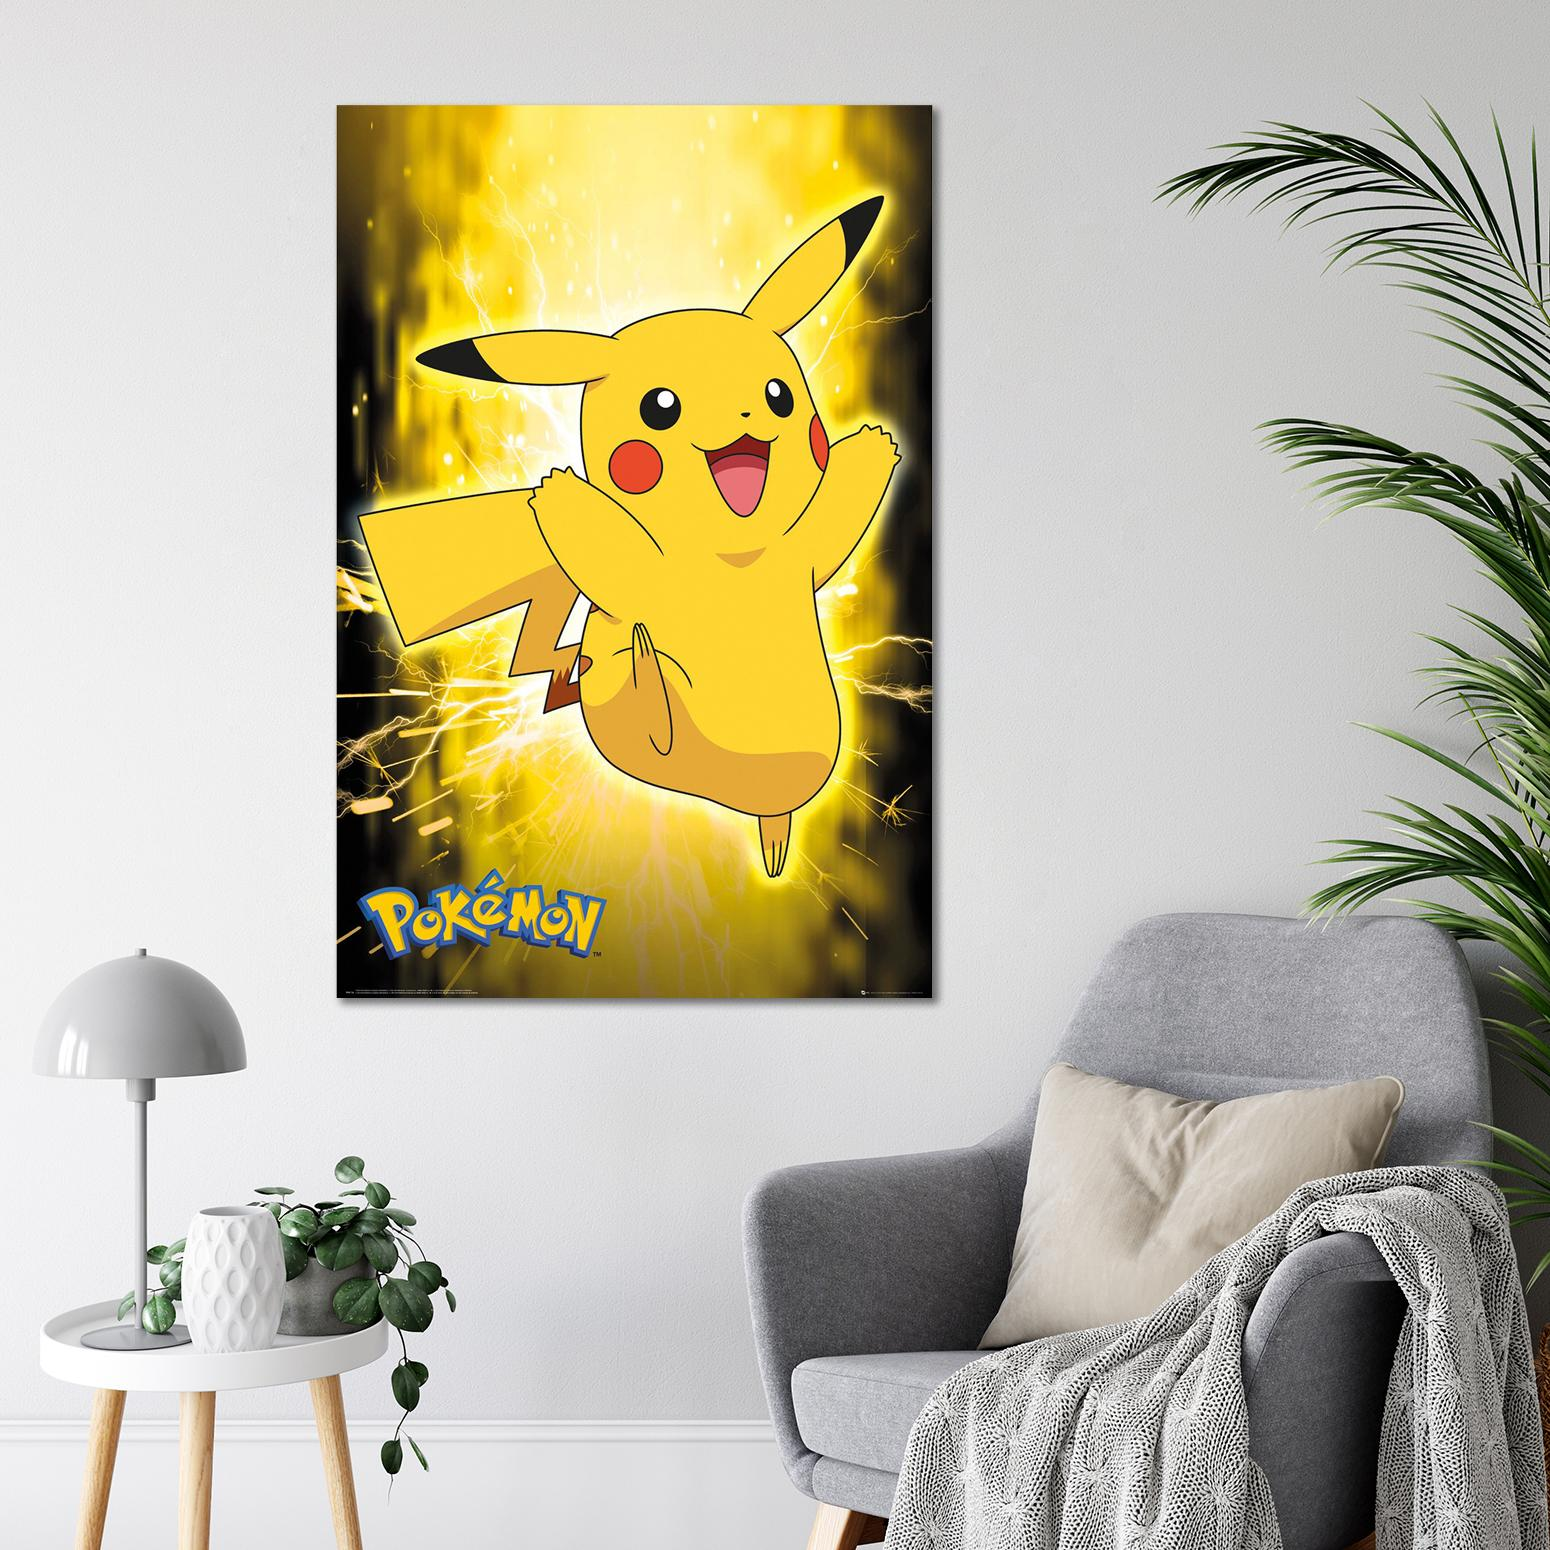 GB Poster EYE Pikachu Großformatige Pokémon Neon Poster